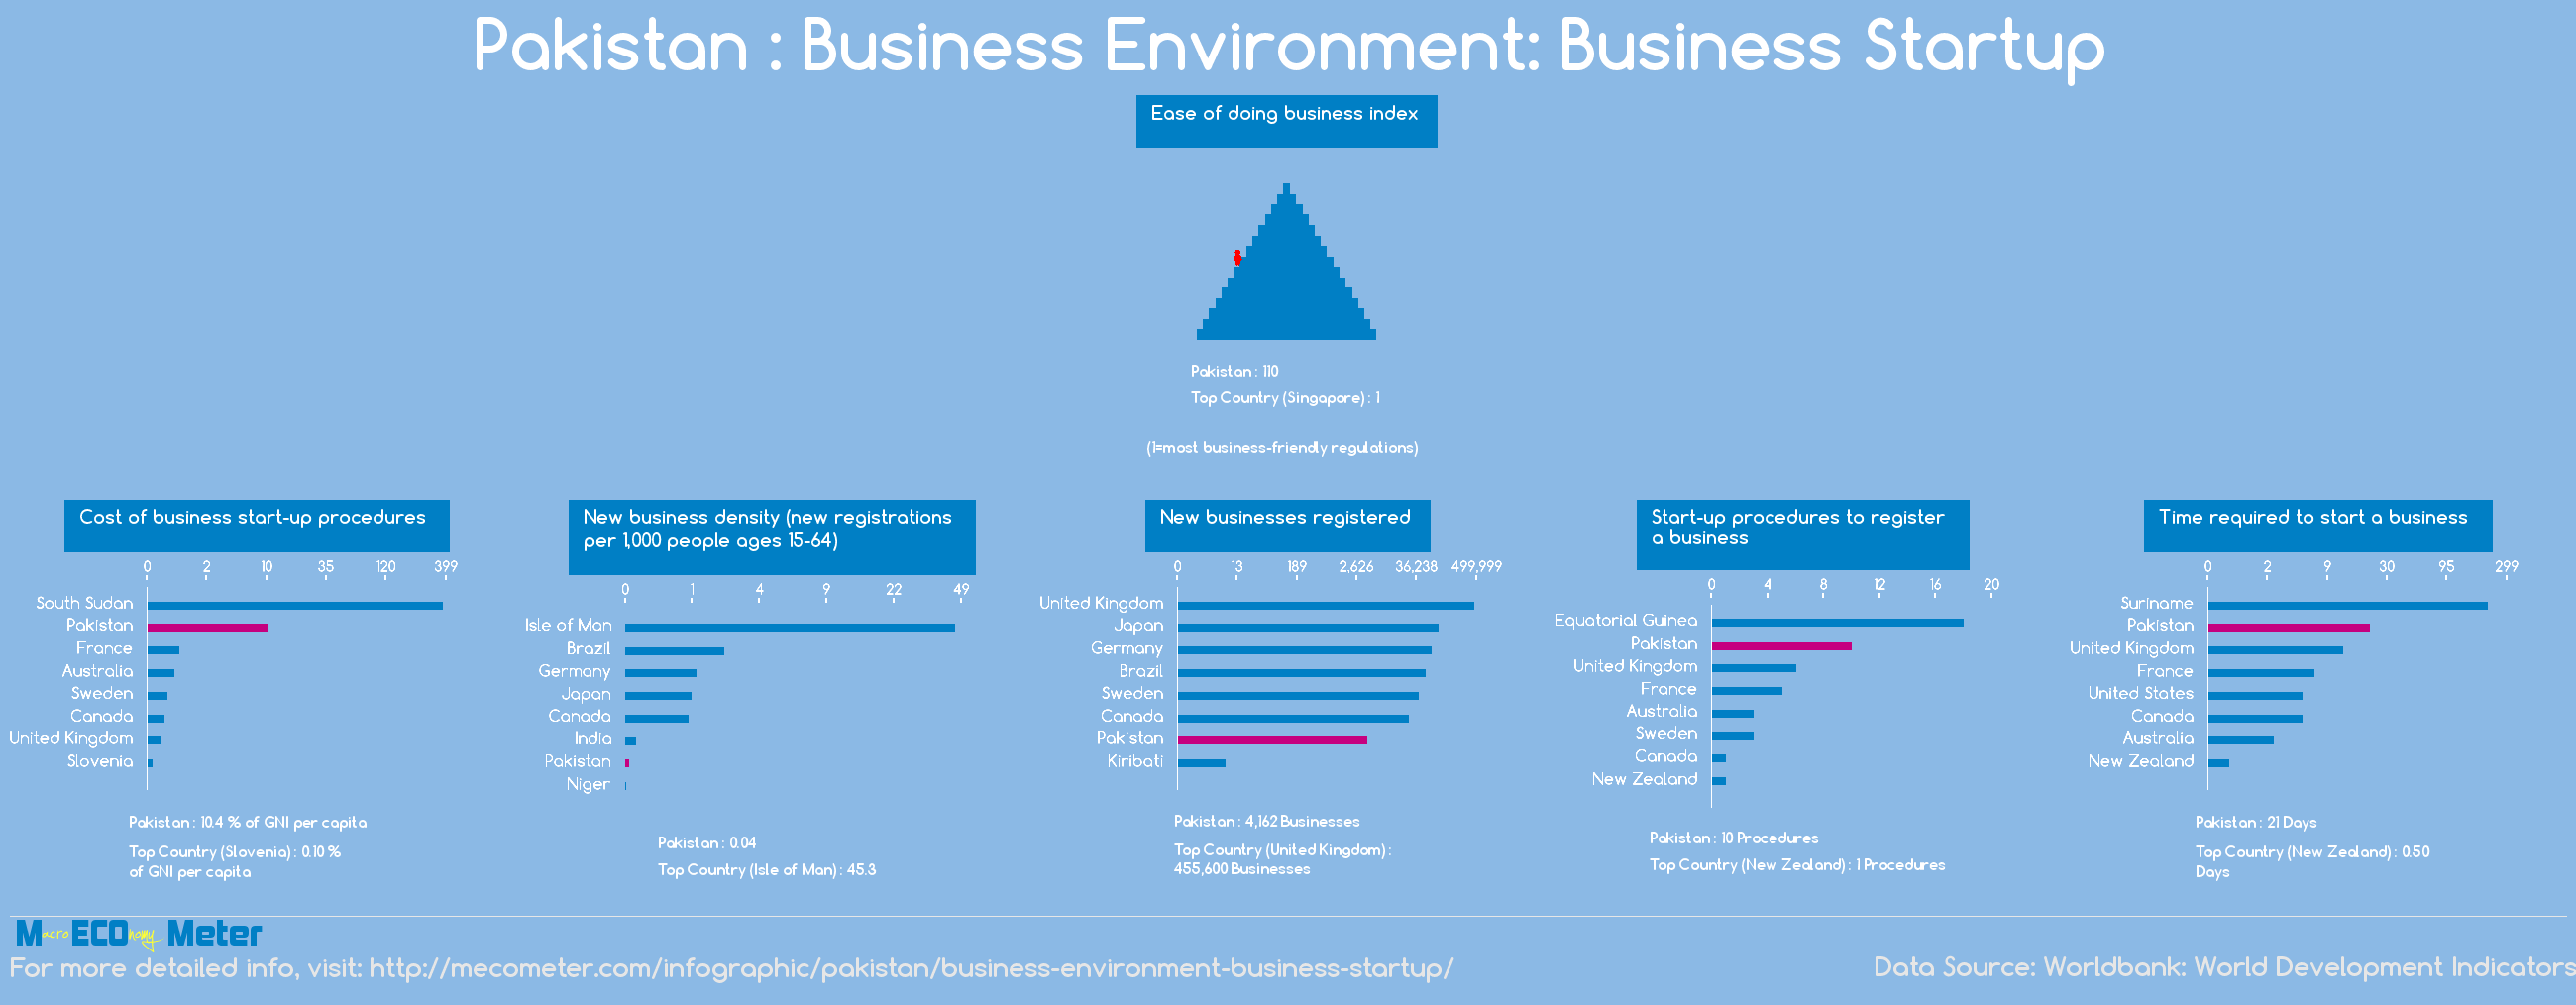 Pakistan : Business Environment: Business Startup